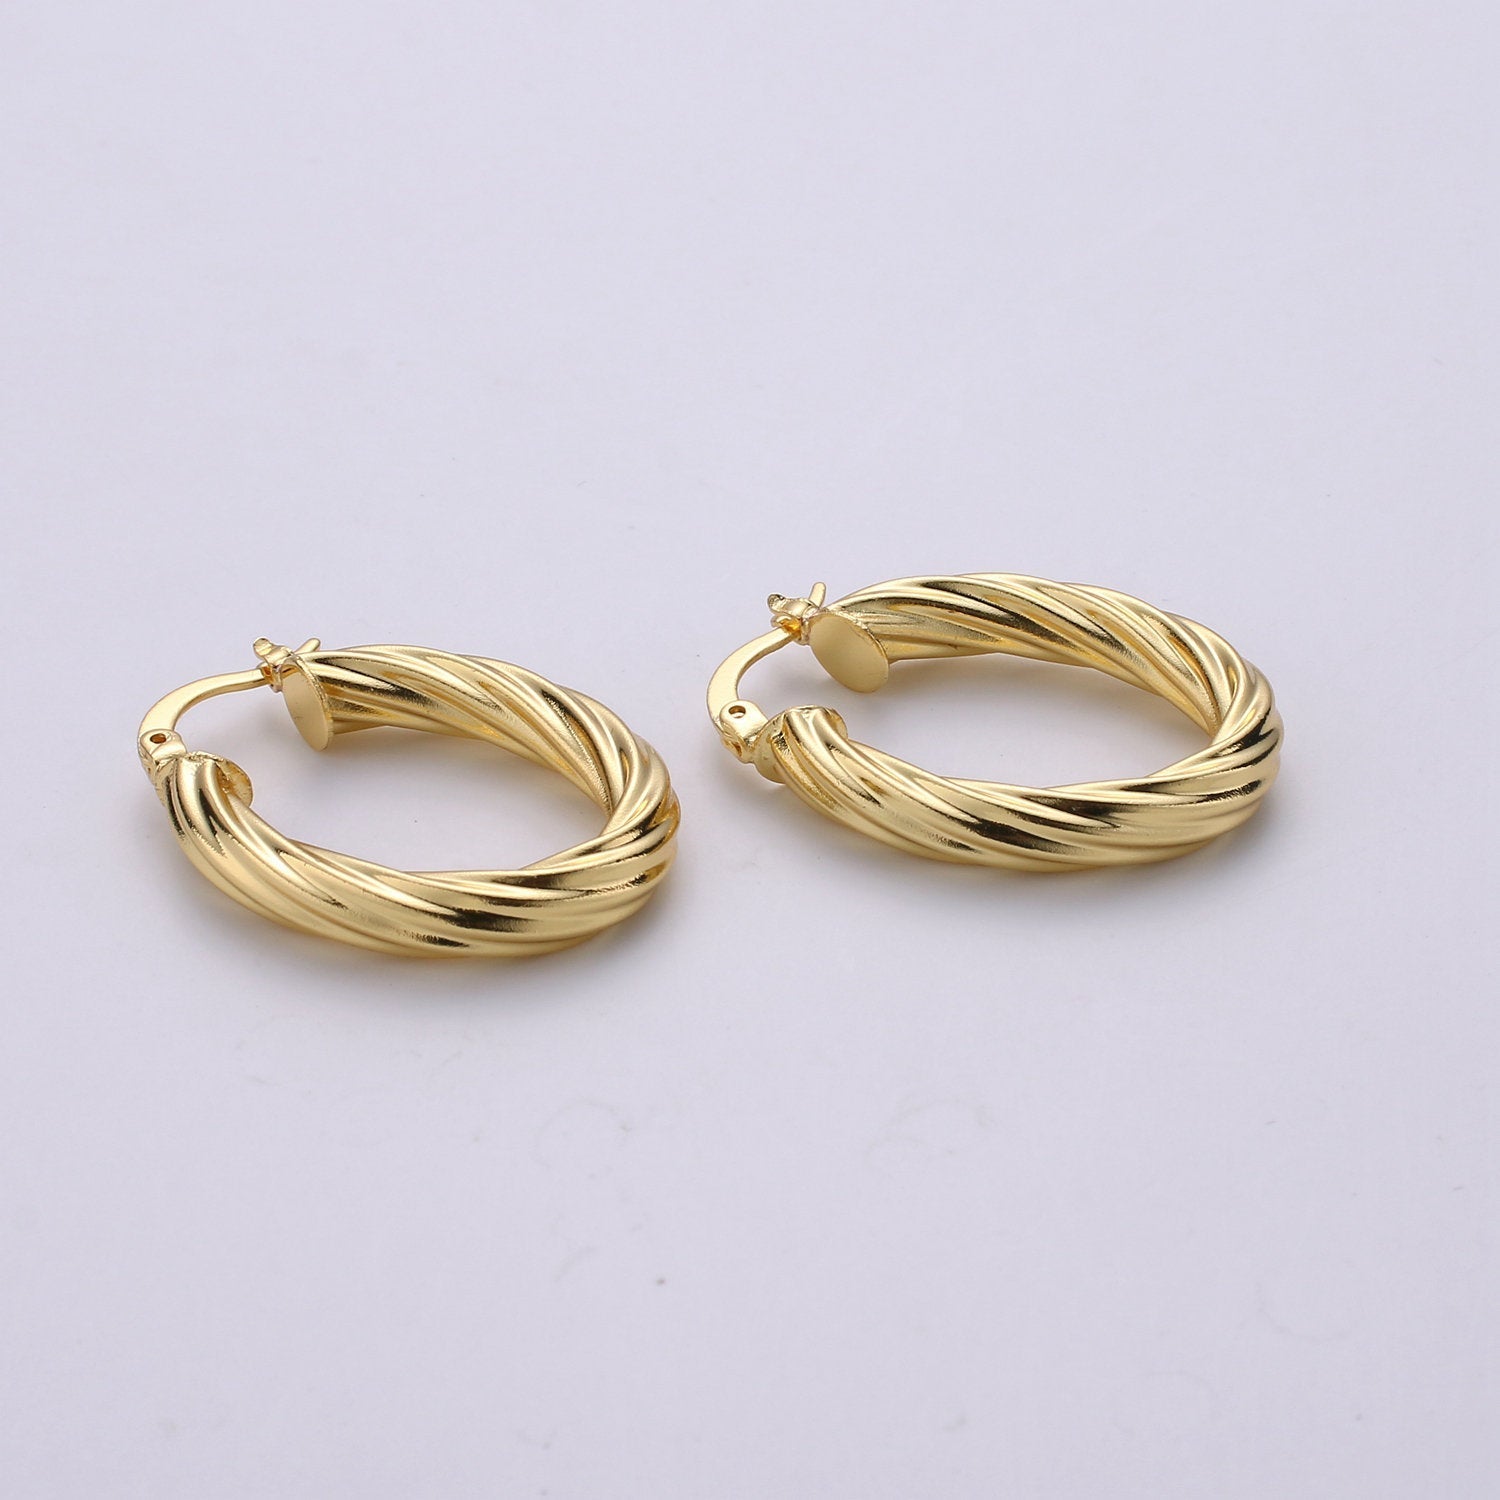 24k Vermeil Gold Earrings, Hoop Earrings, Small Hoop, Oval Rope Texture Earring, Gift for Her, Earrings for Women, Everyday Wear Earrings - DLUXCA